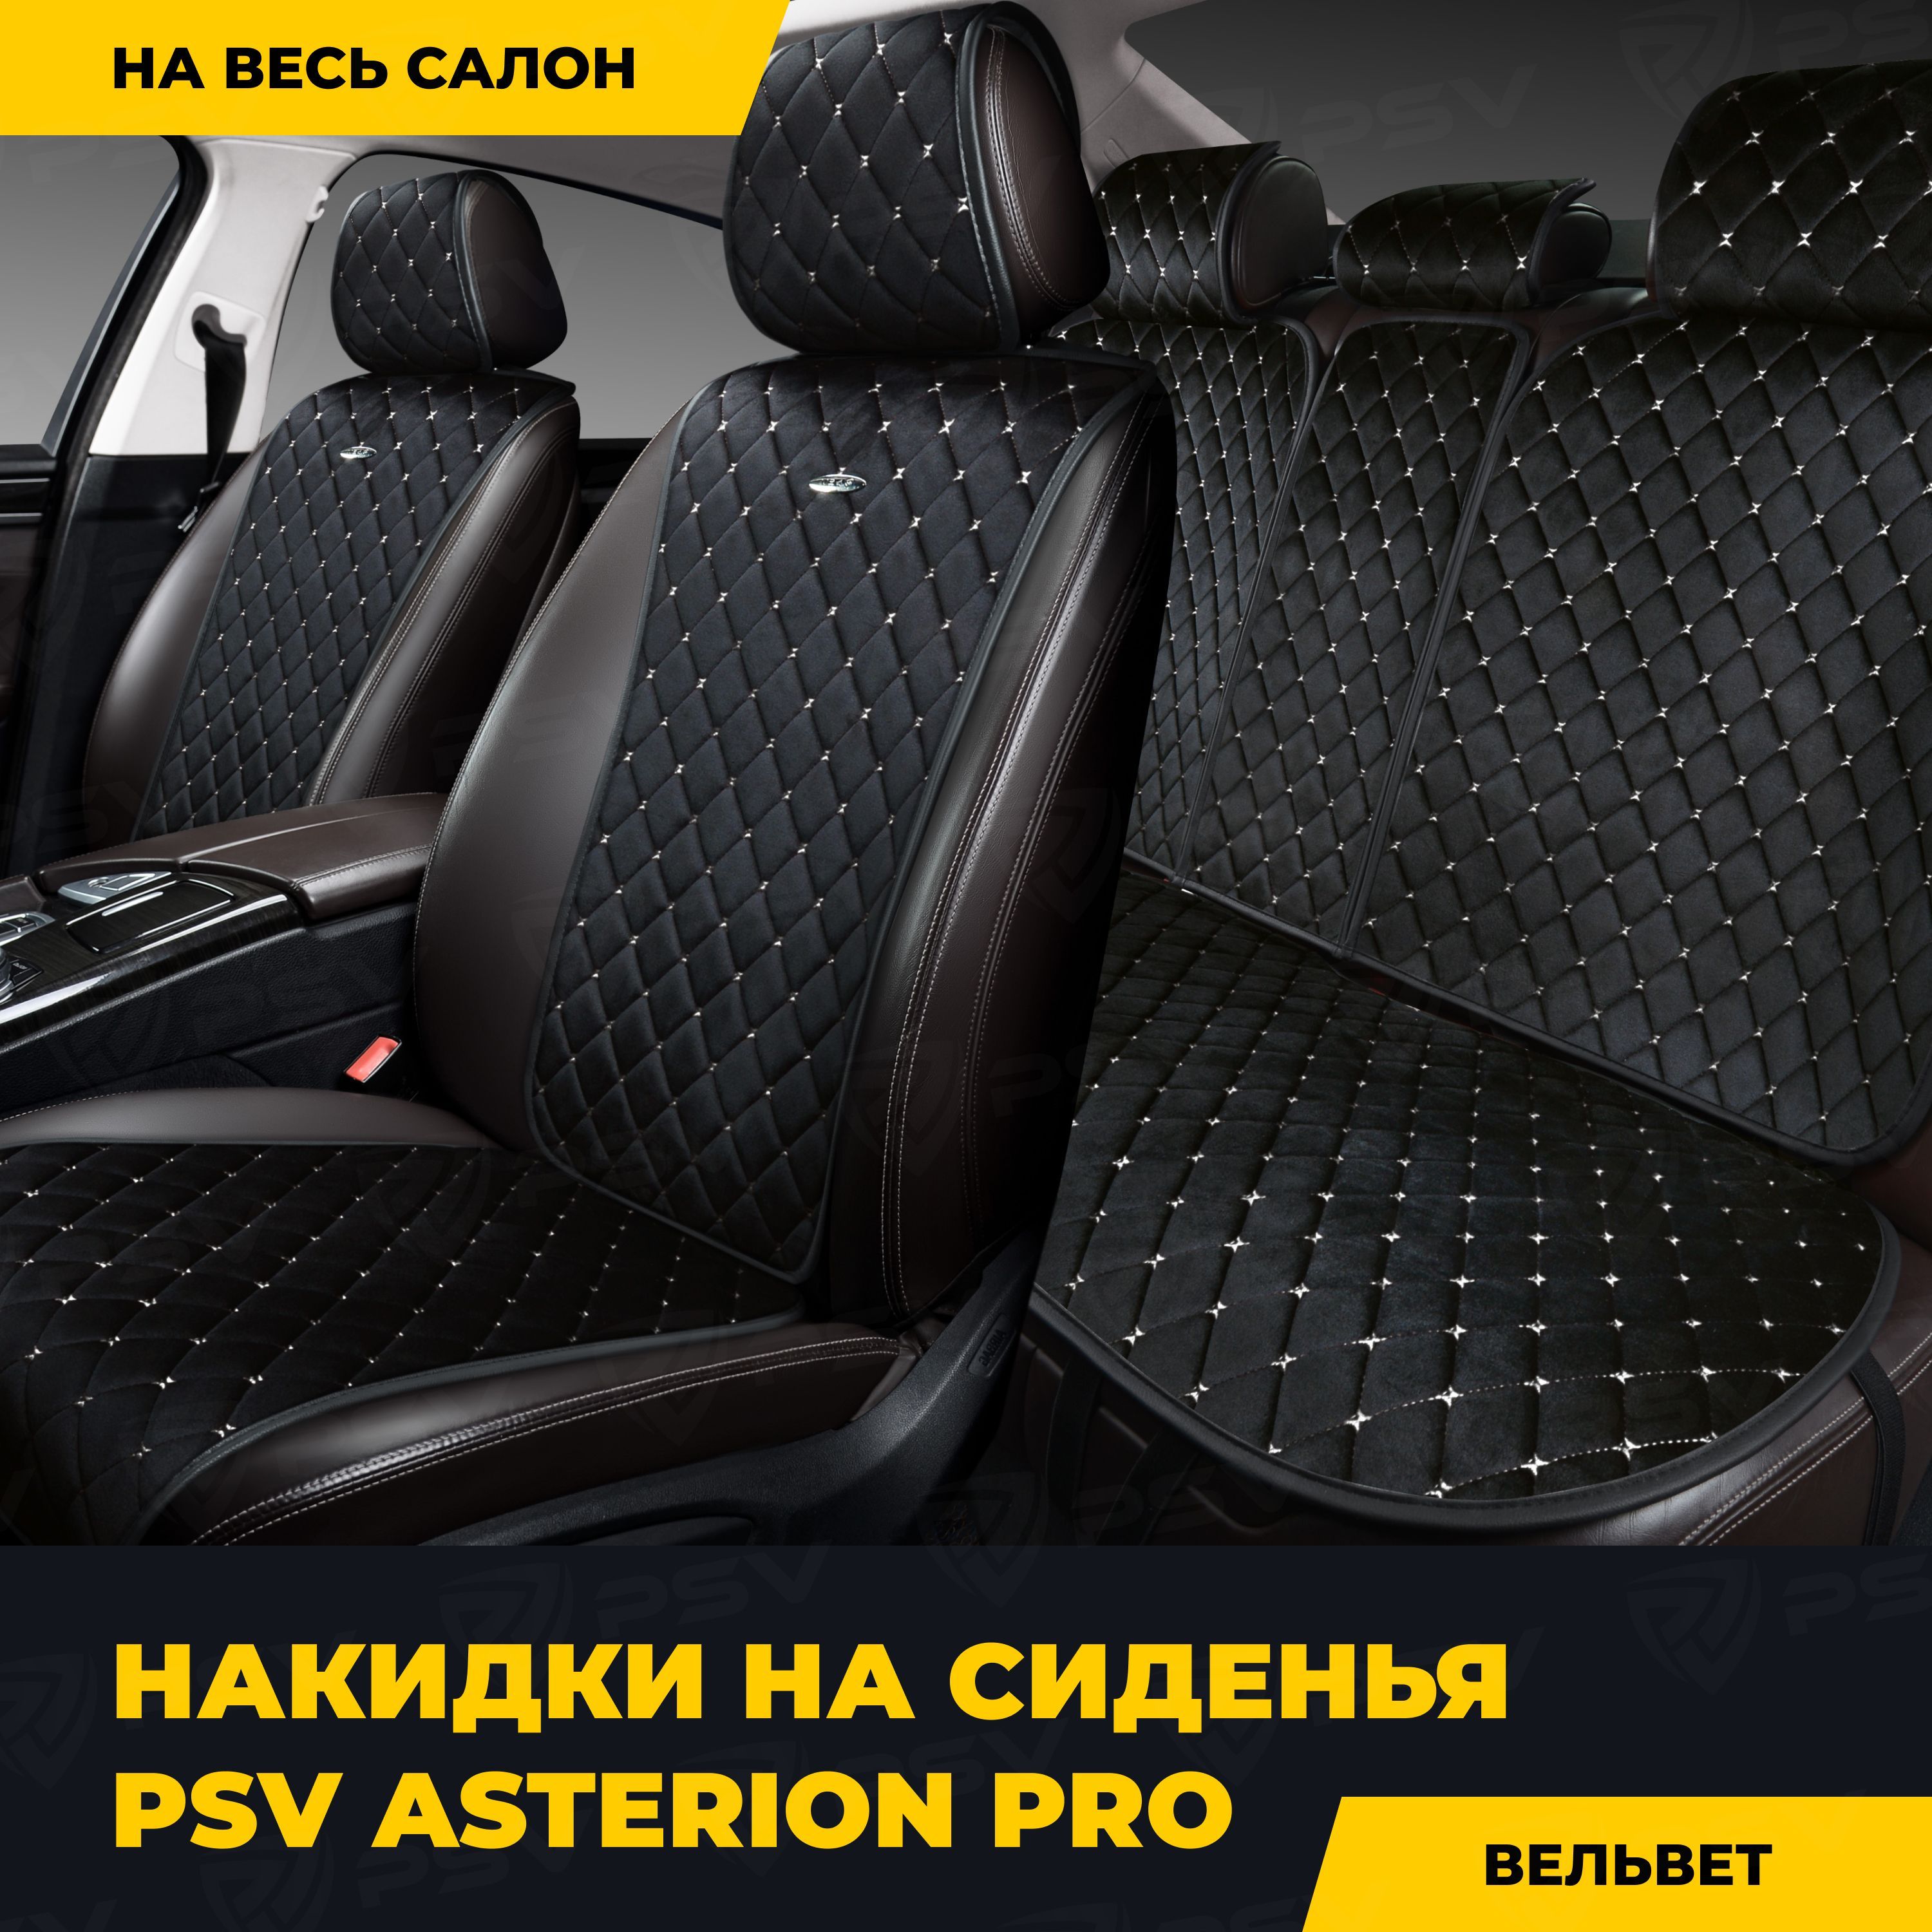 Установка подогрева передних сидений - Fiesta 6 и Fusion